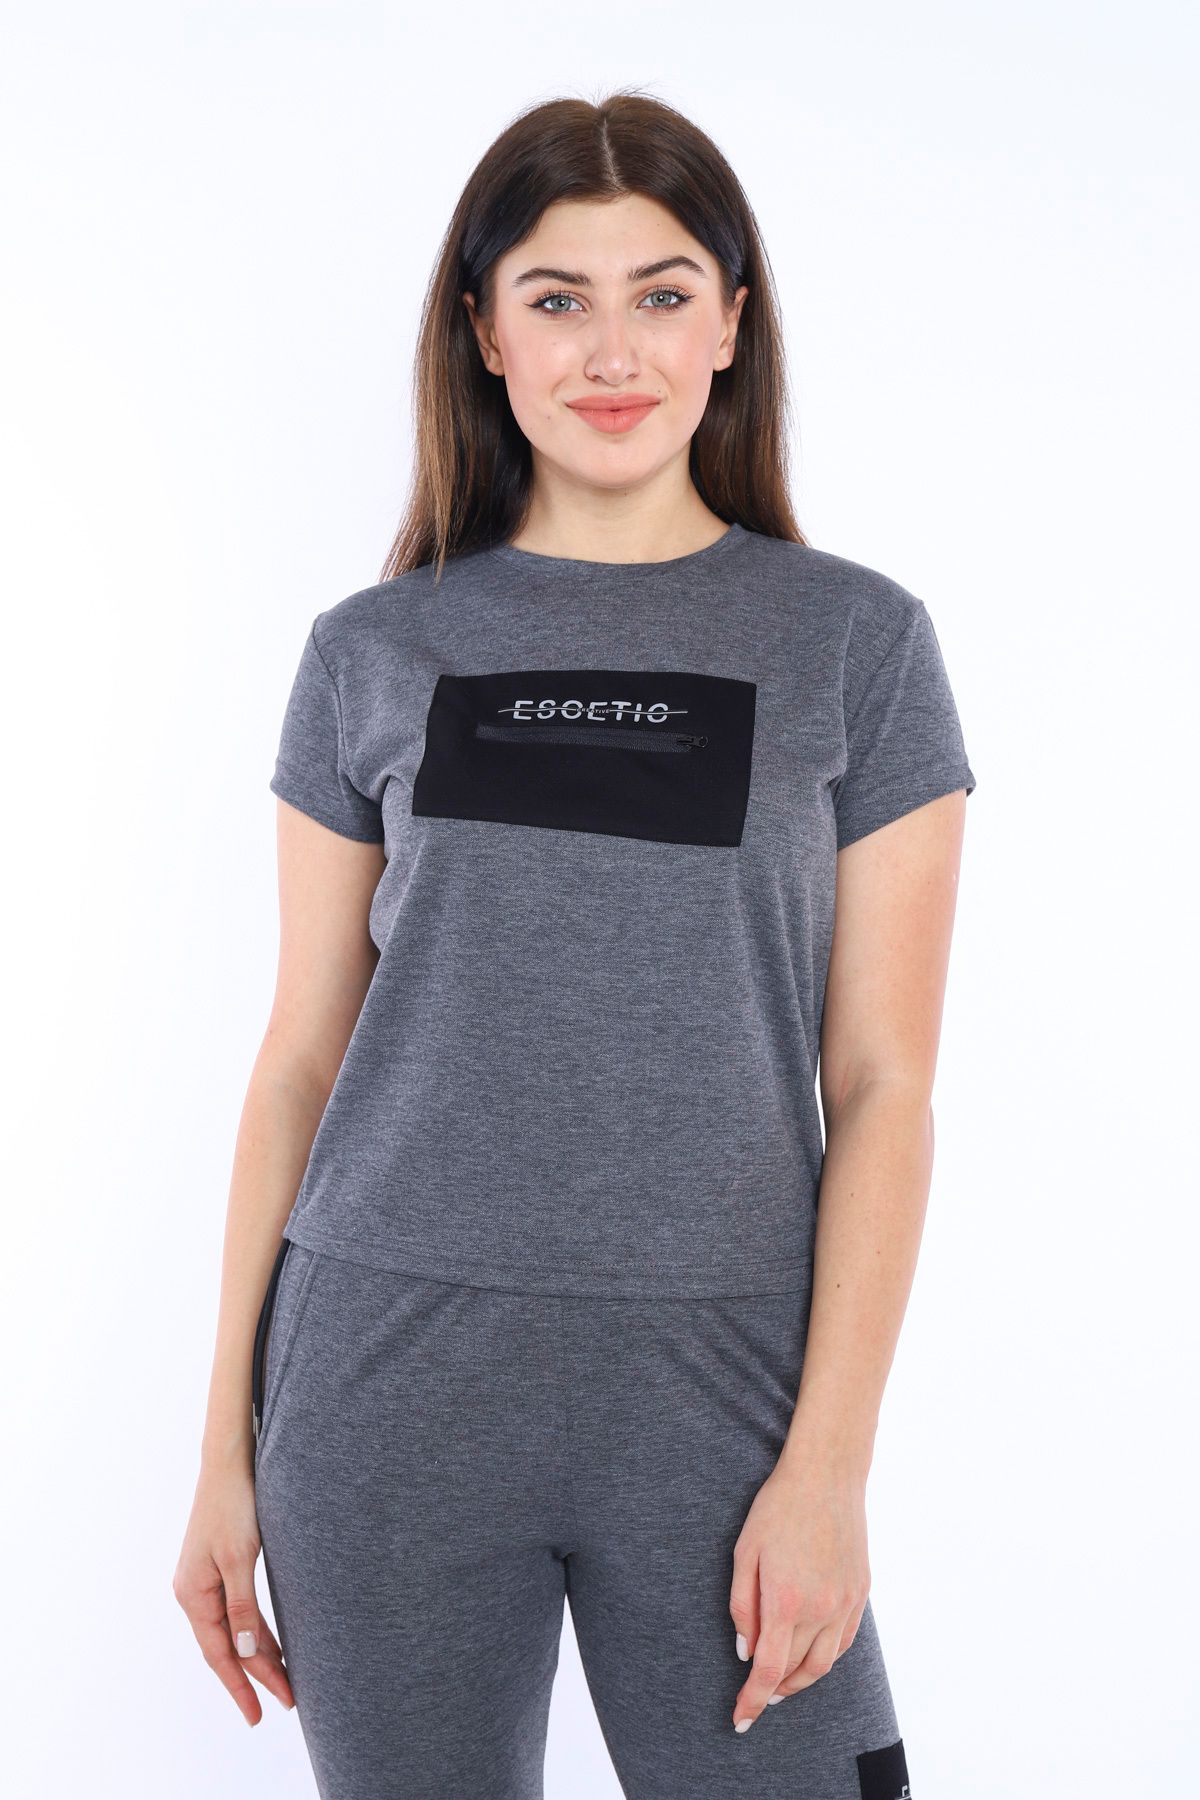 Escetic Antresit Kadın Dokuma Detaylı Abd Pike Nefes Alan T-shirt Takım A3004